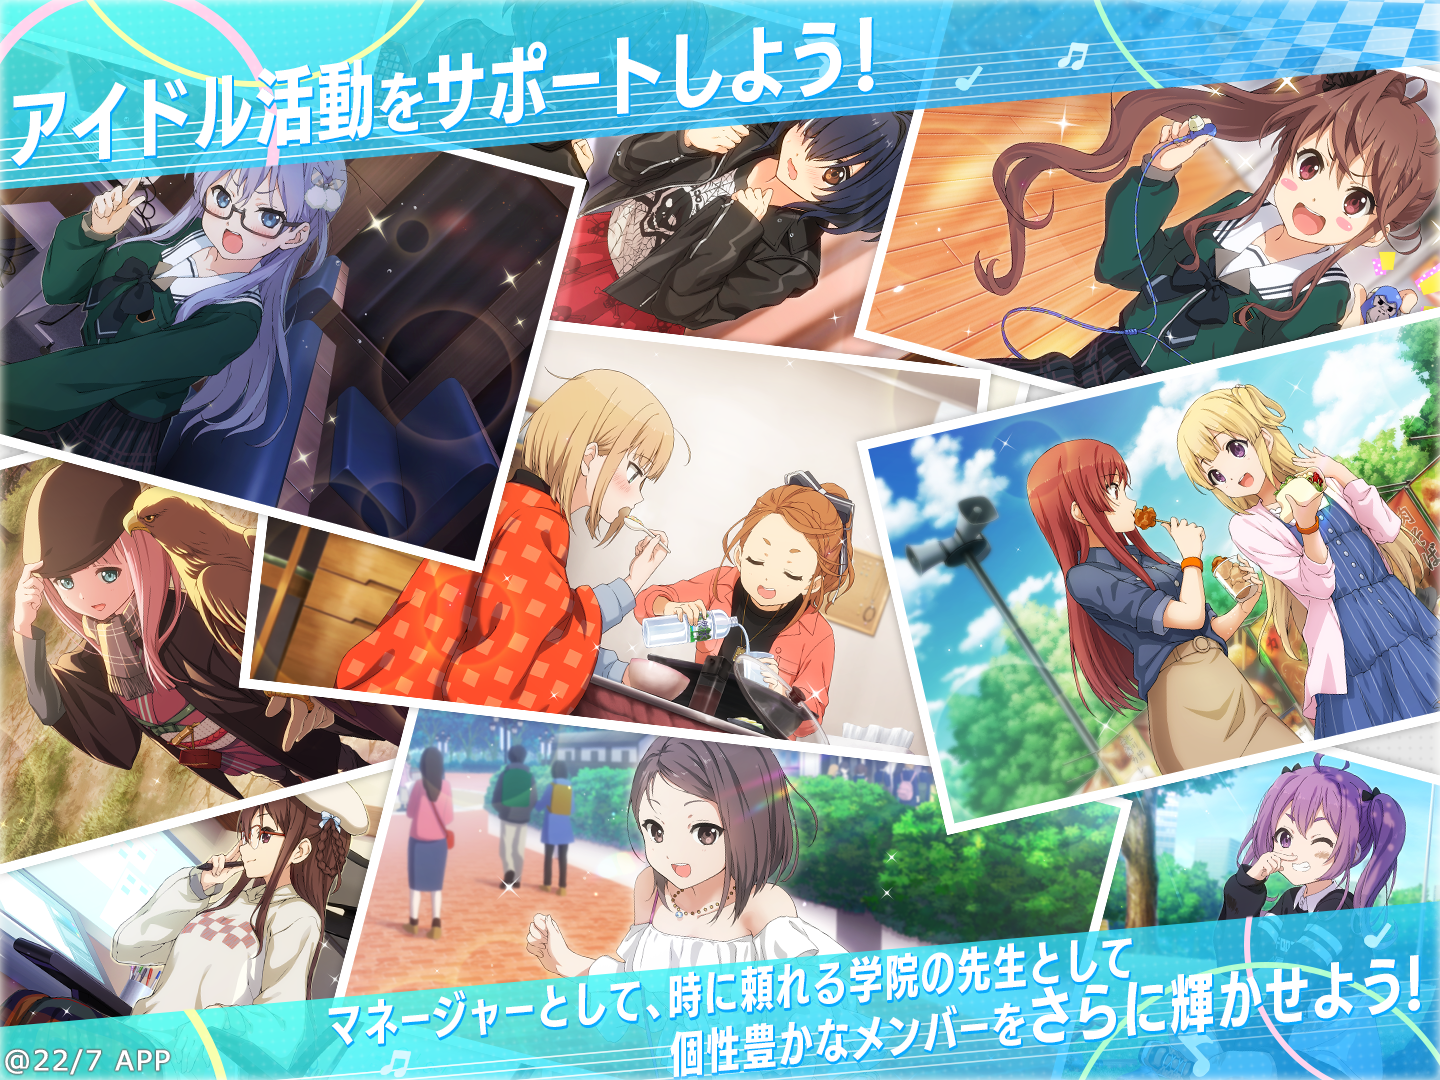 22/7 Anime Promo Returns with English Subtitles